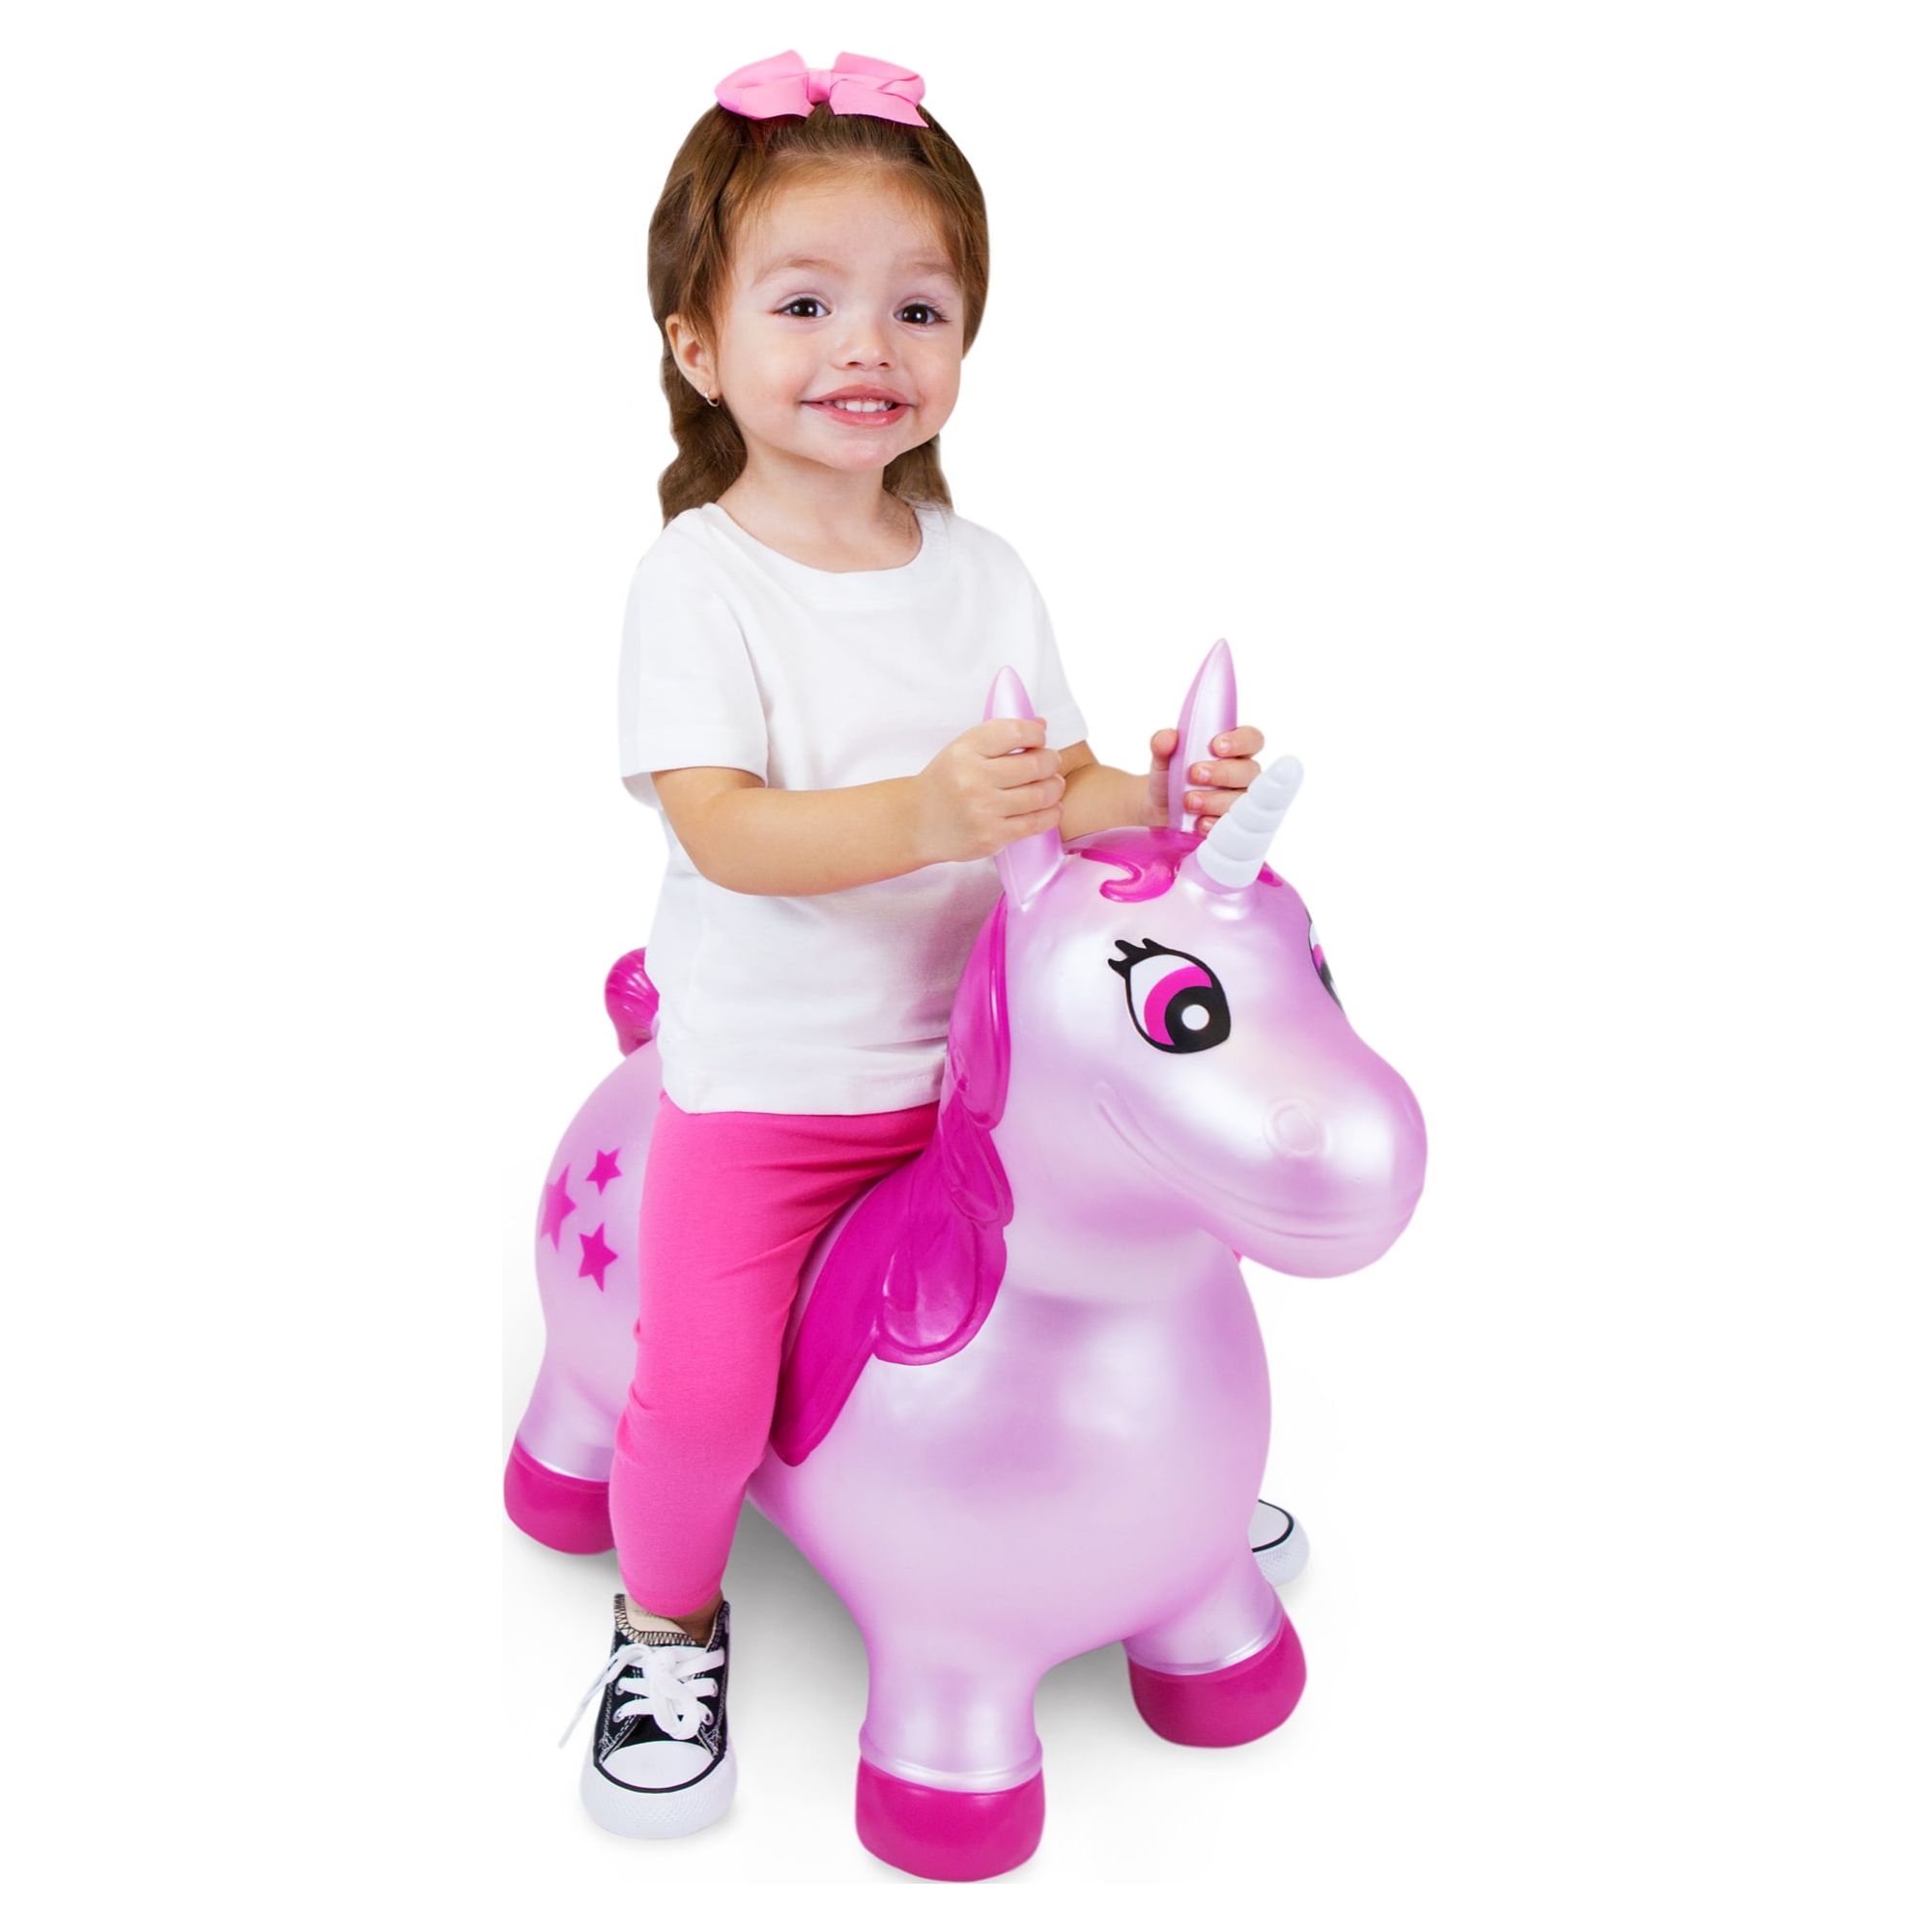 Waddle Pink Unicorn Inflatable Bouncer Ride on - image 1 of 7